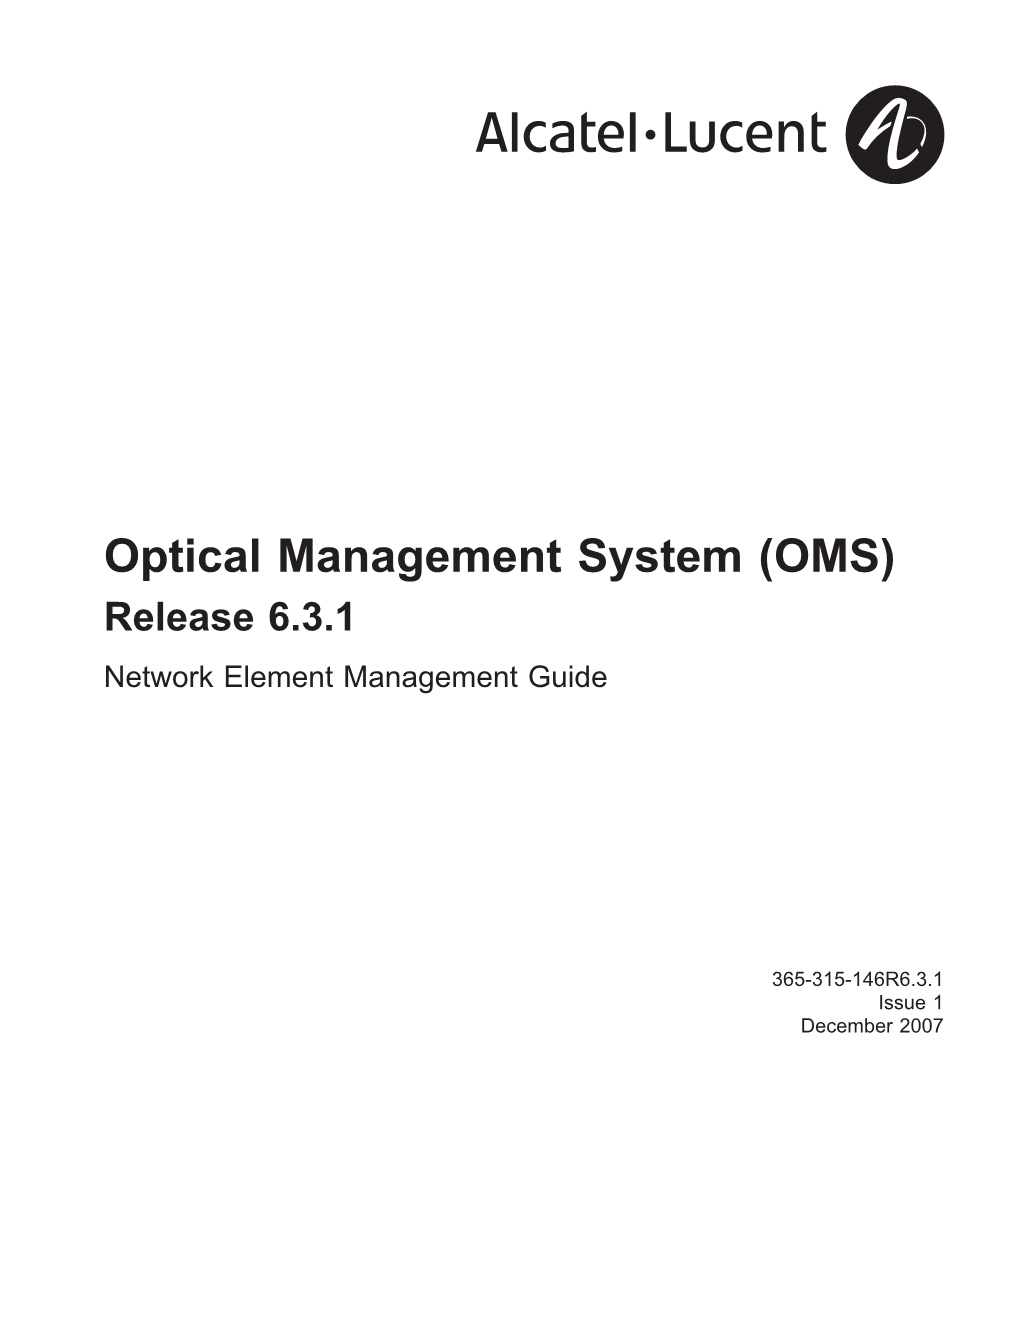 Optical Management System (OMS) Release 6.3.1 Network Element Management Guide